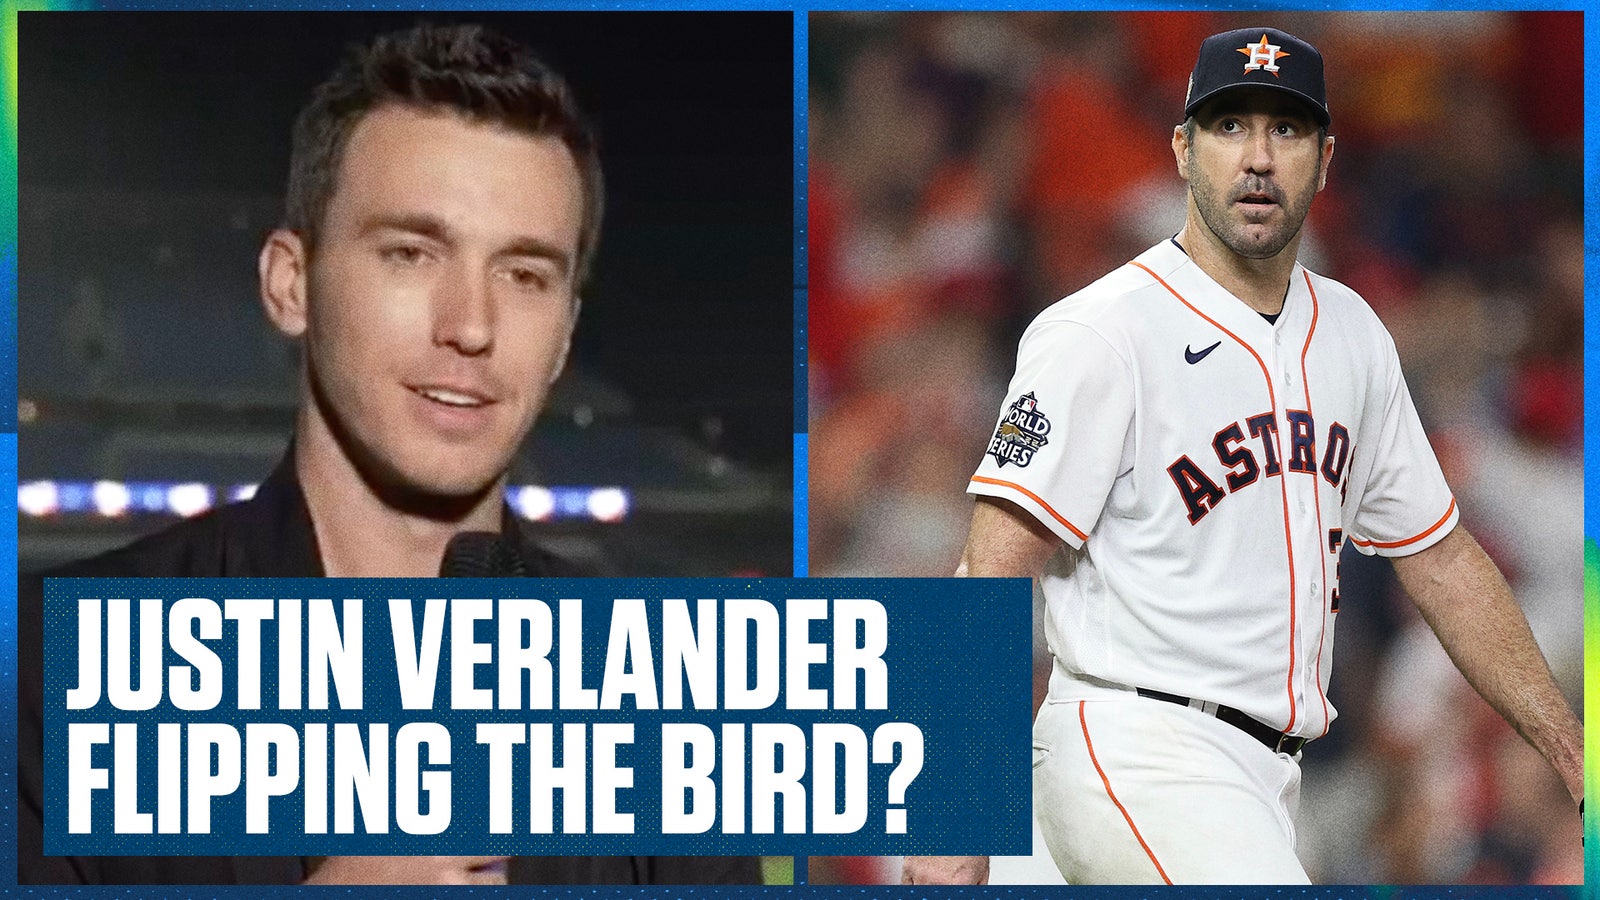 Justin Verlander flipping the bird to Philly fans?